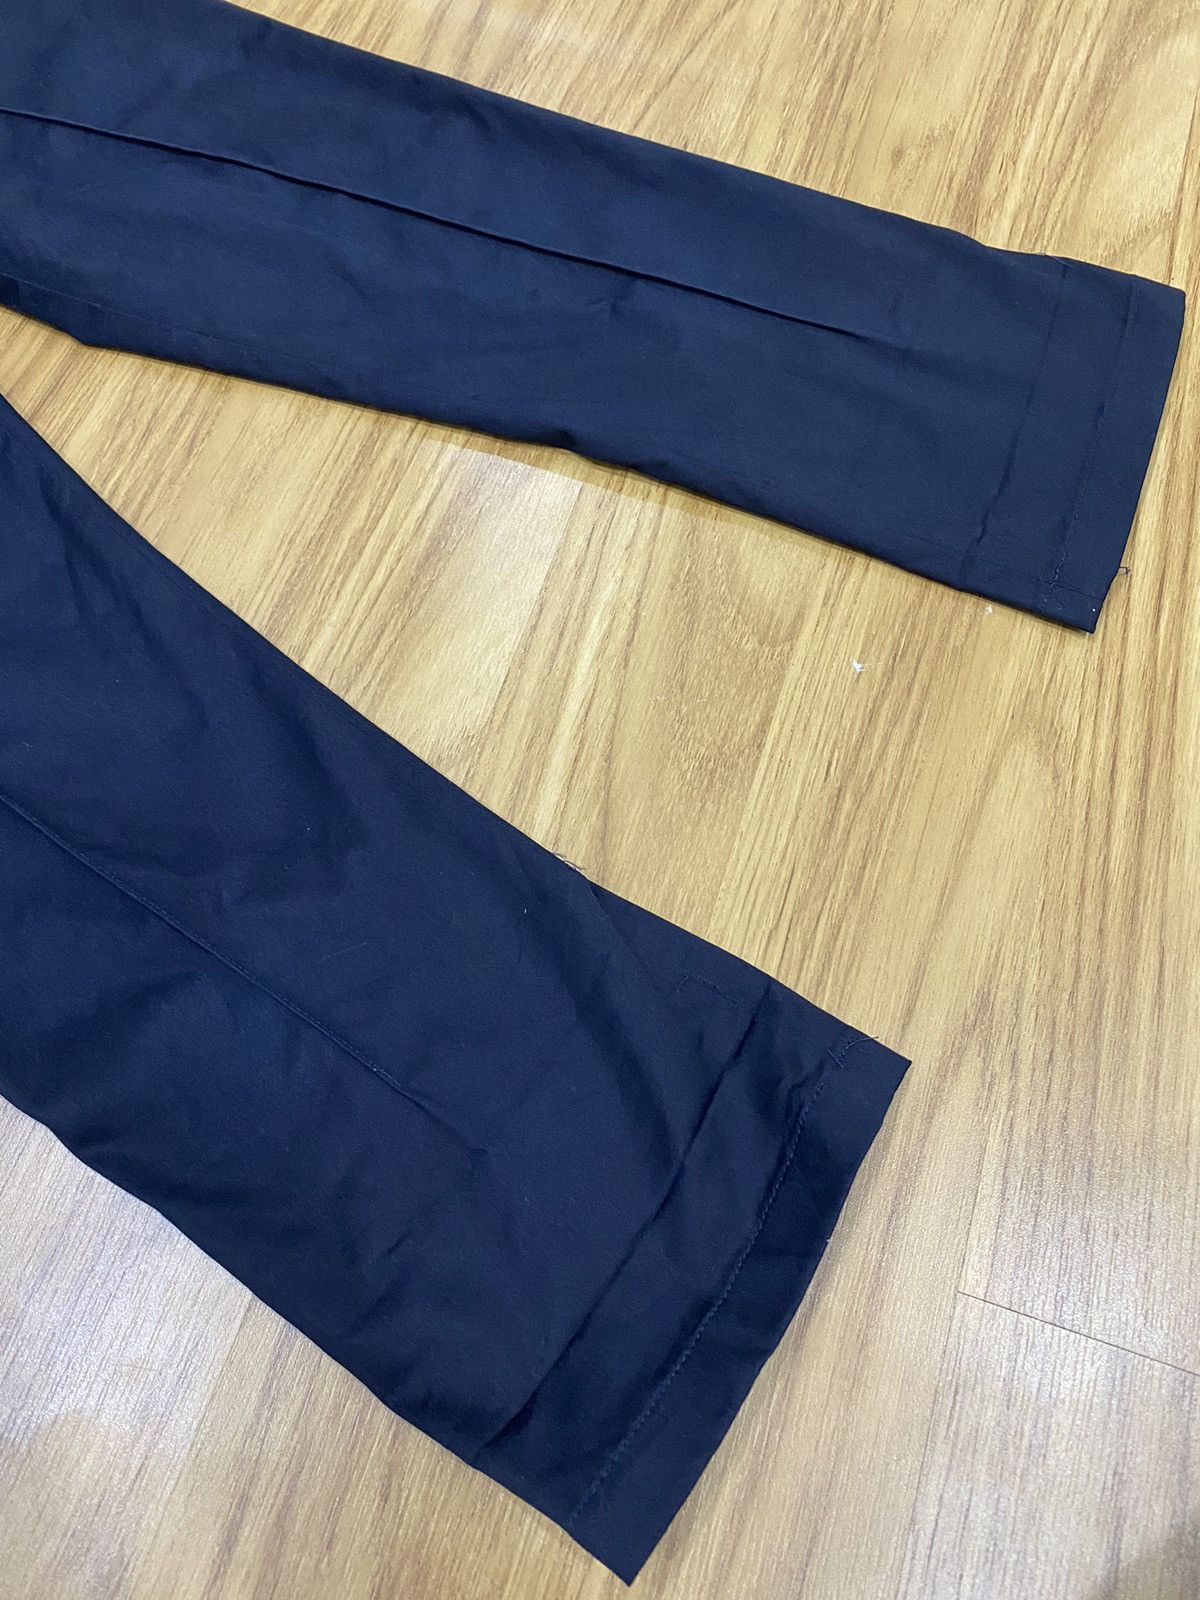 2000's Miu Miu Black Pants Trousers - 3